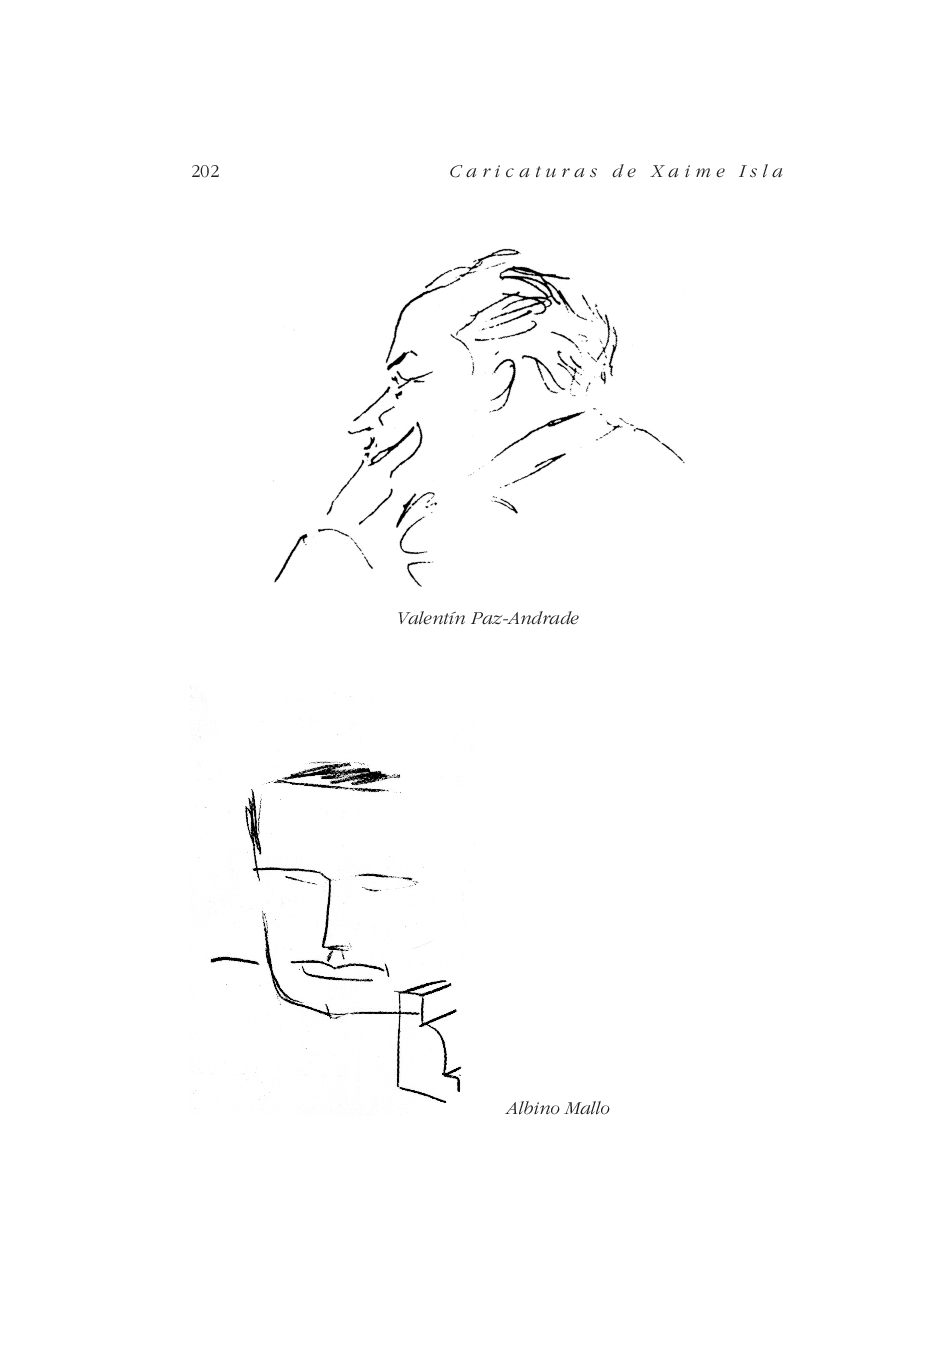 Caricaturas do Café Derby - Valentín Paz-Andrade e Albino Mallo